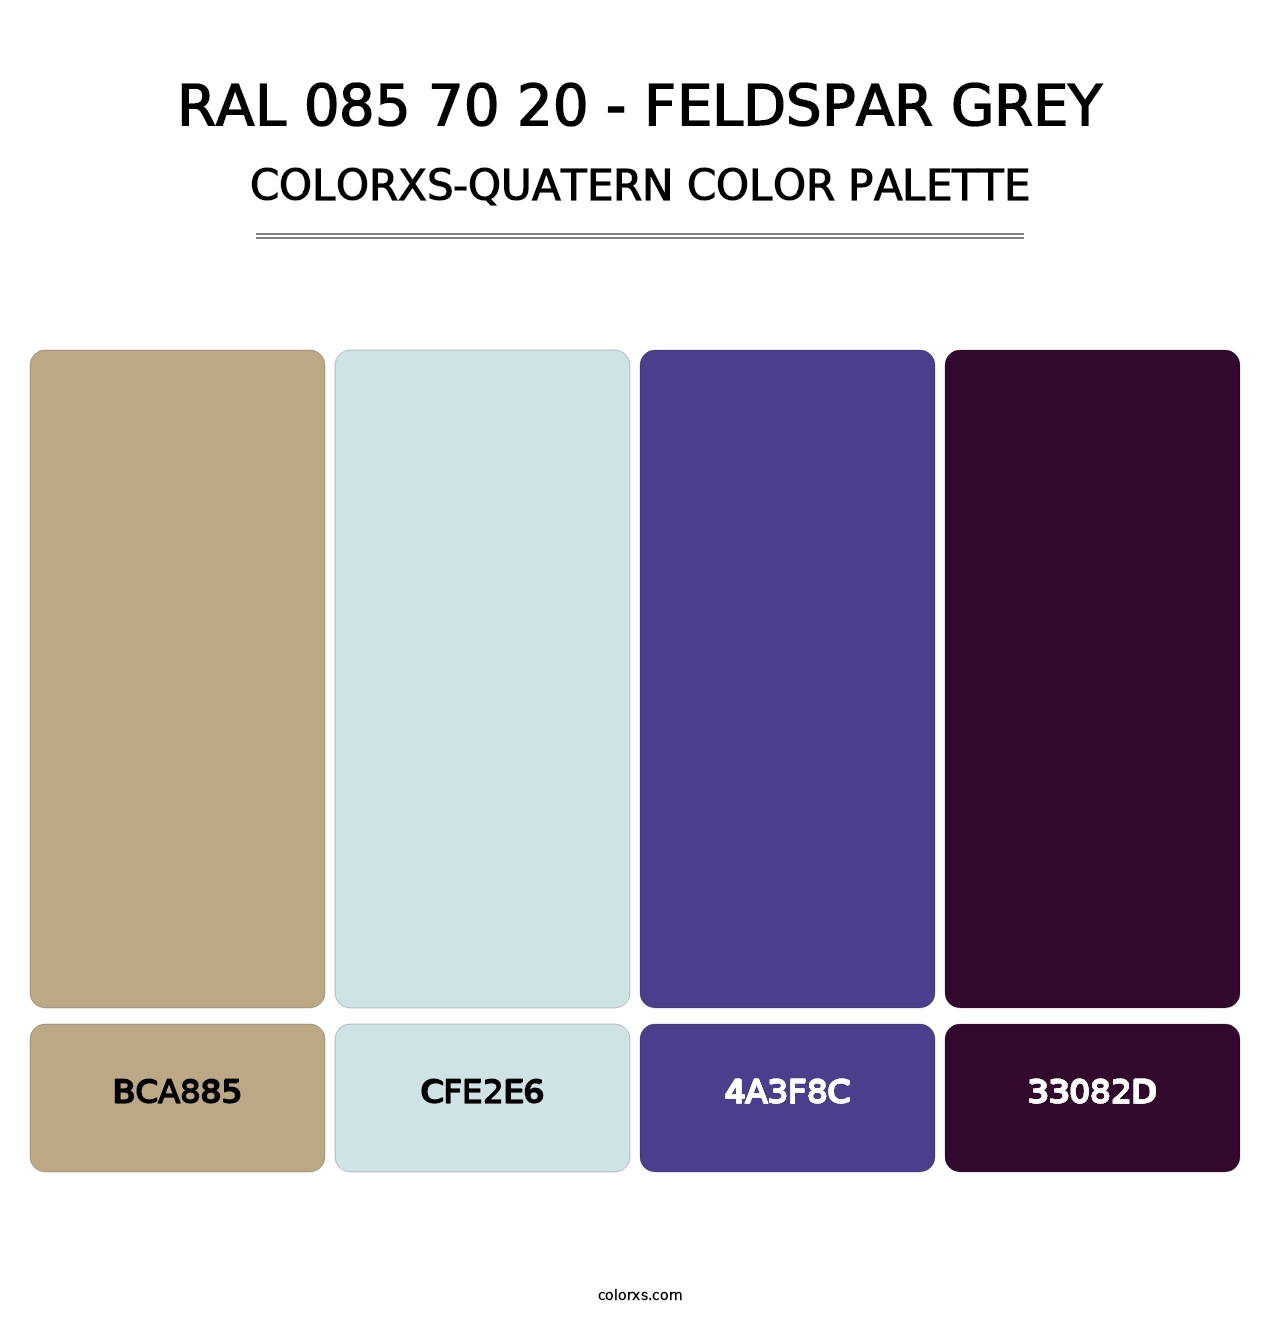 RAL 085 70 20 - Feldspar Grey - Colorxs Quatern Palette